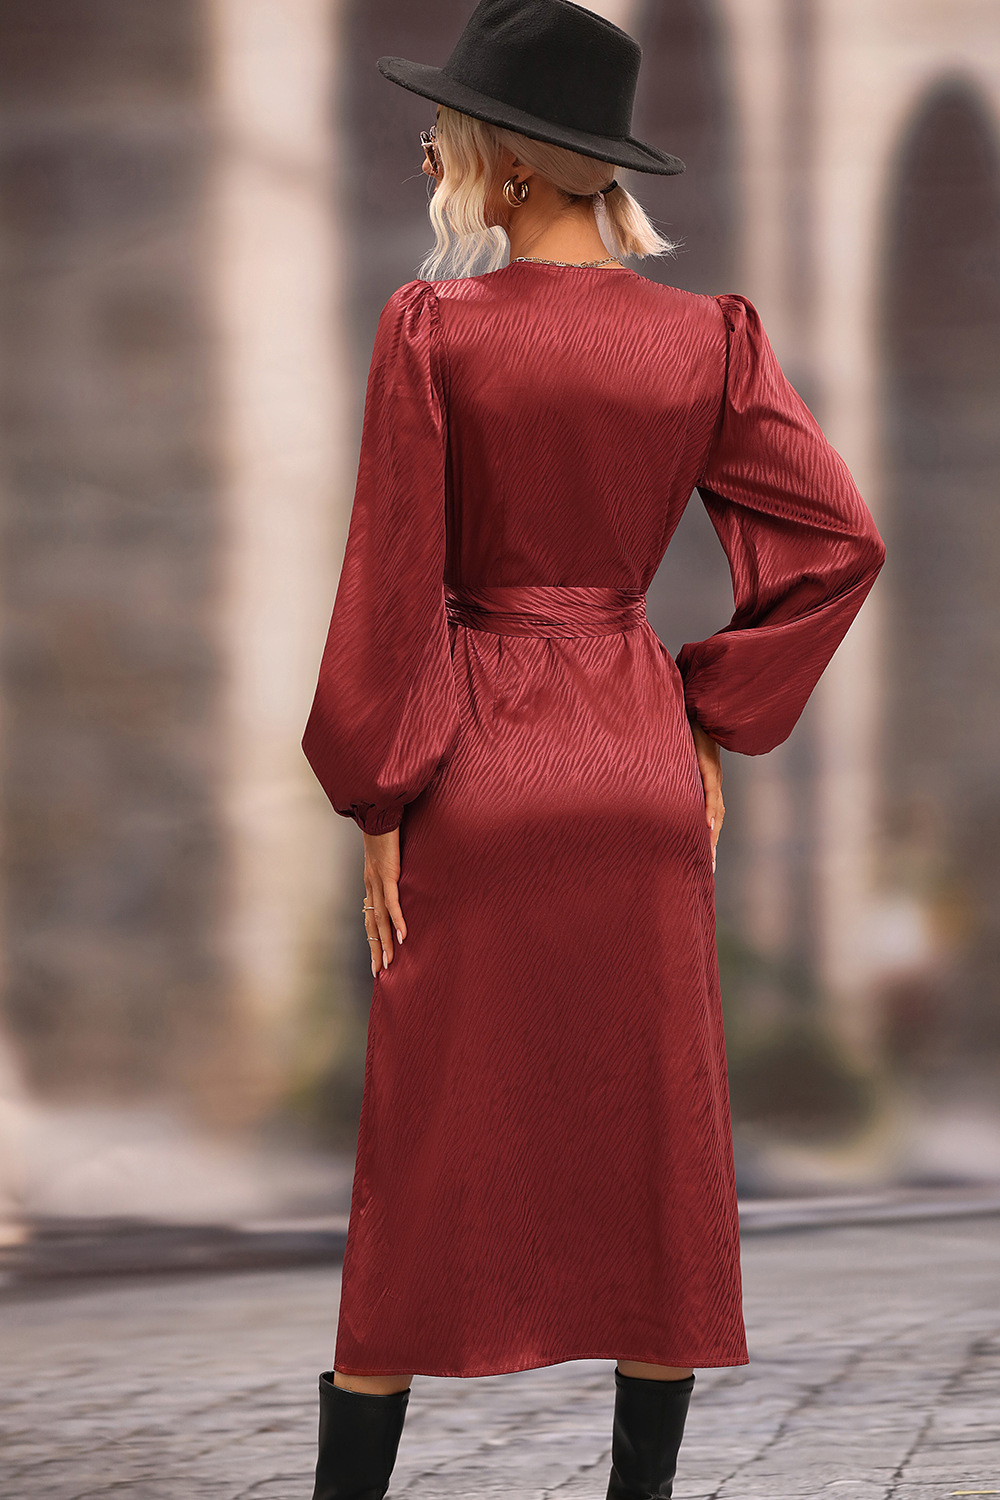 European style autumn long dress long sleeve dress for women